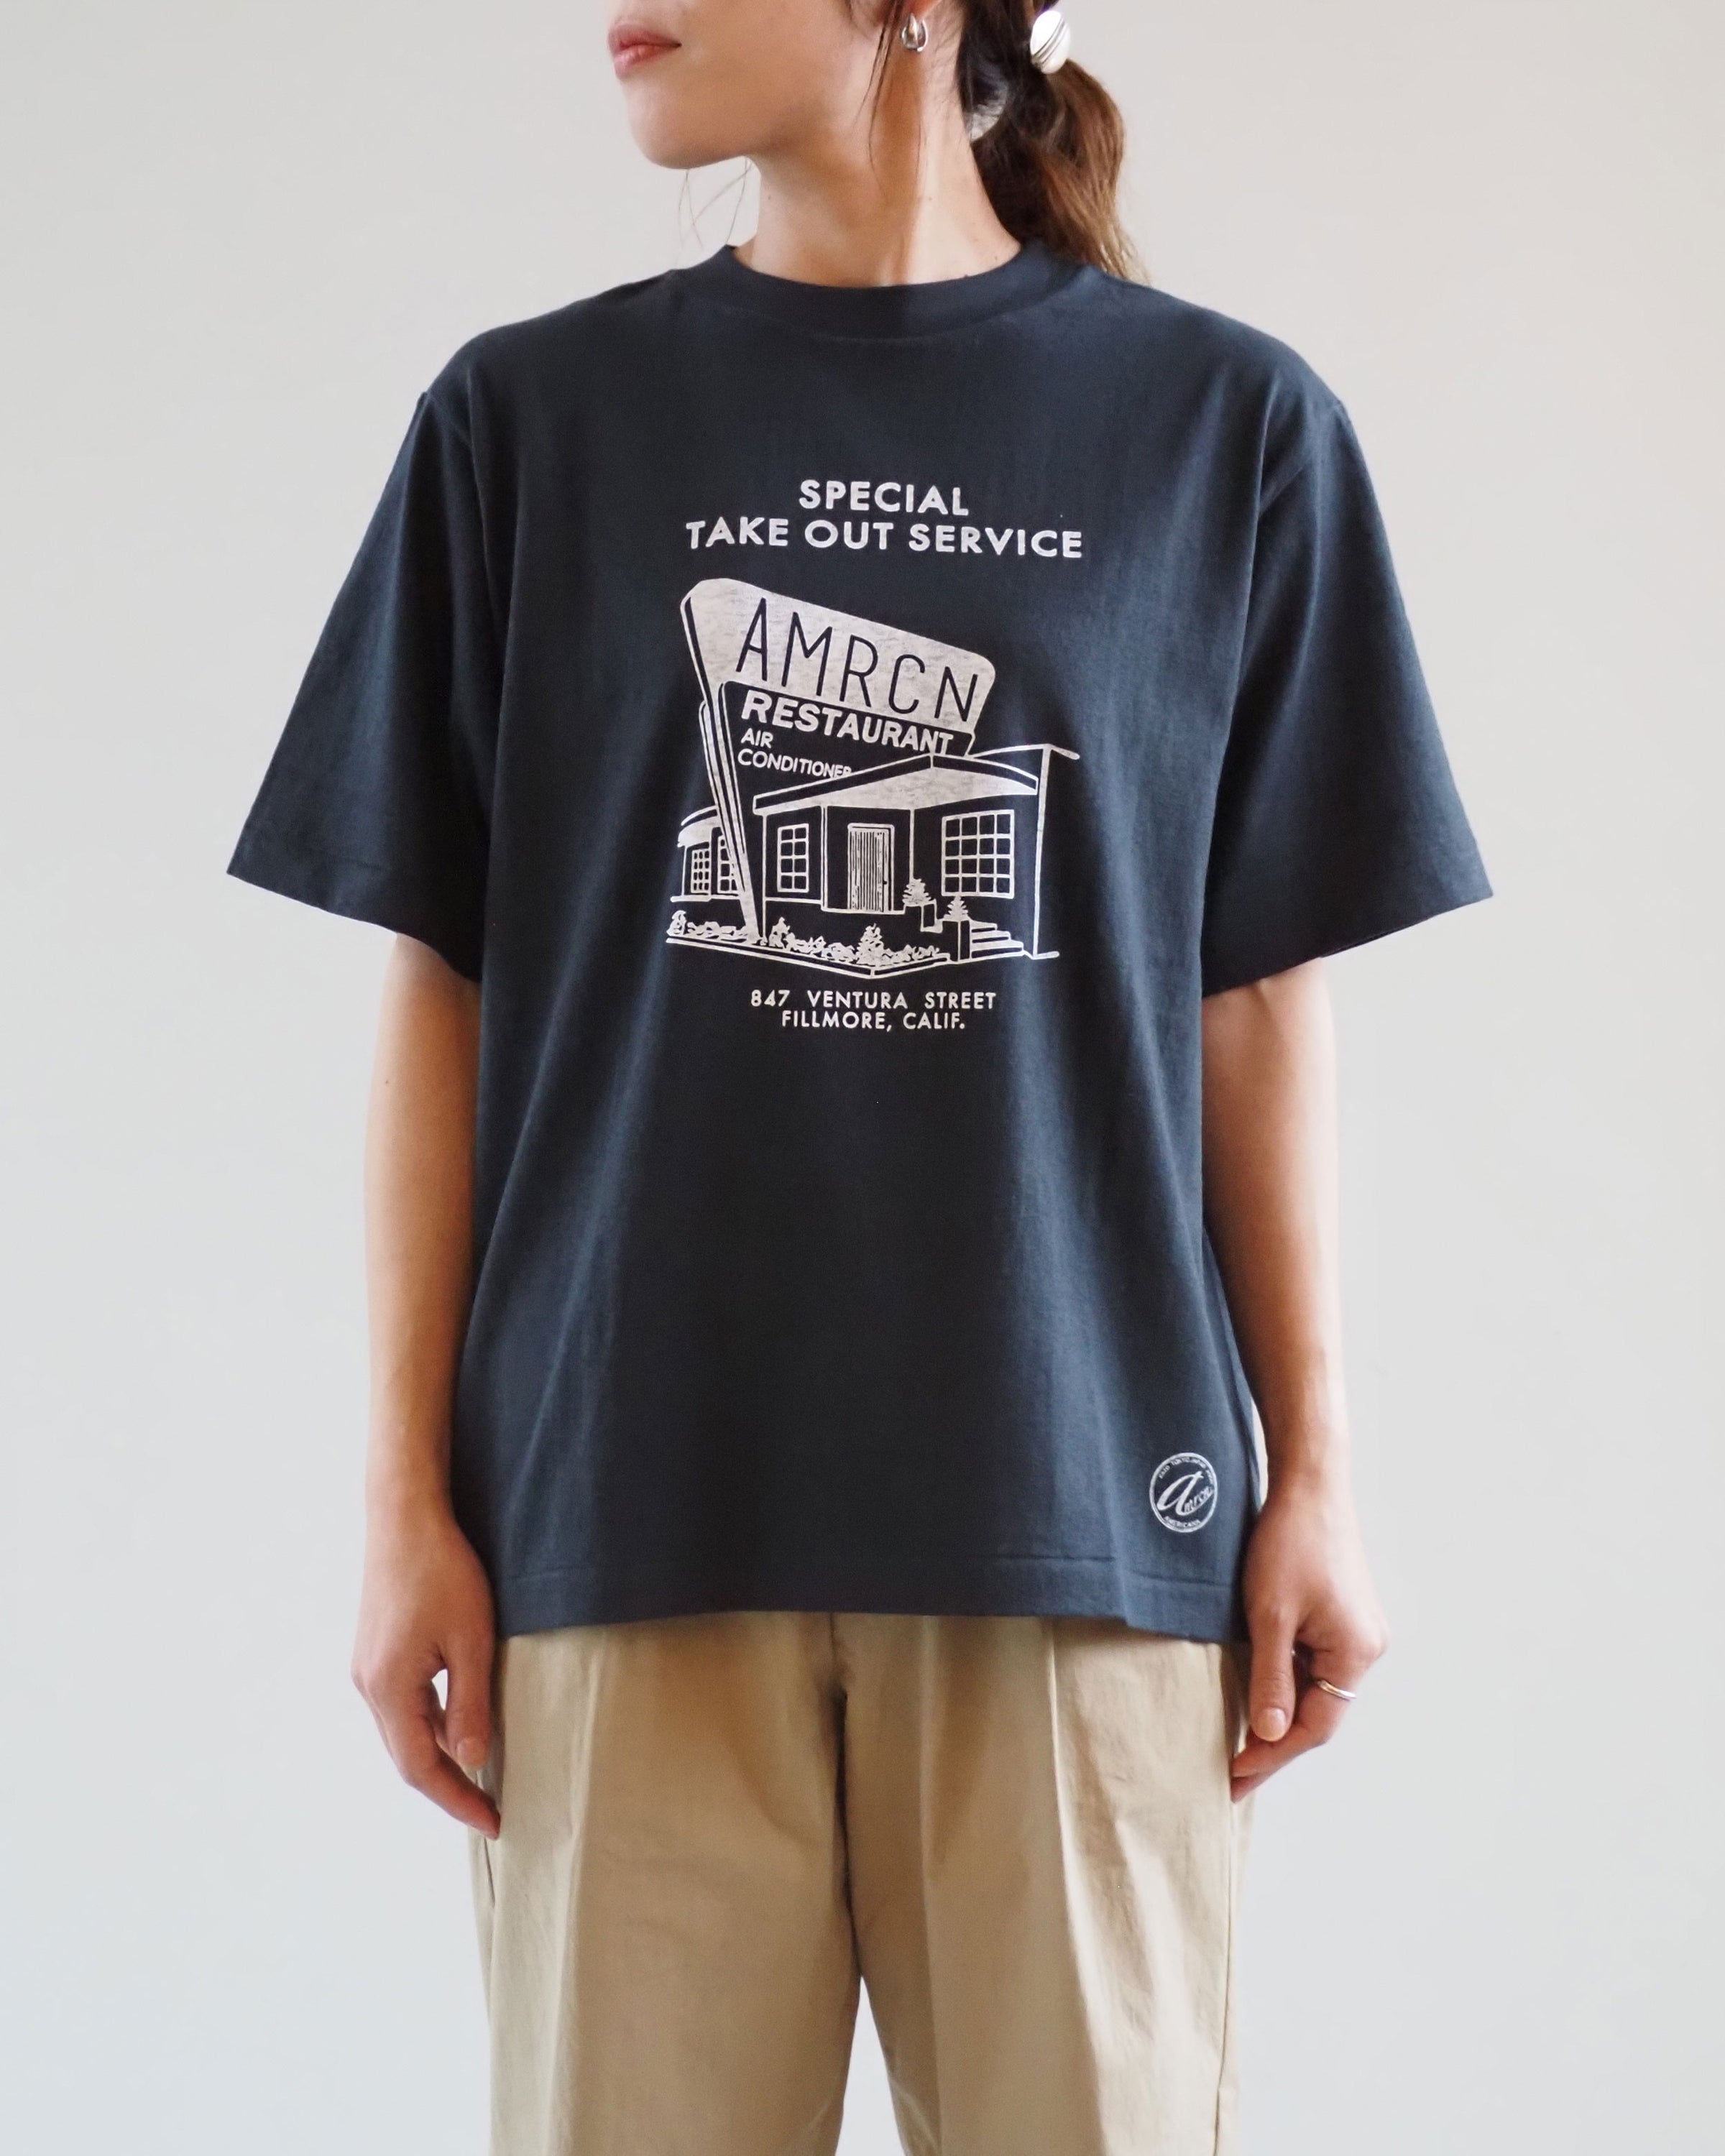 Souvenir Print Seamless Tee Shirt, Sumikuro